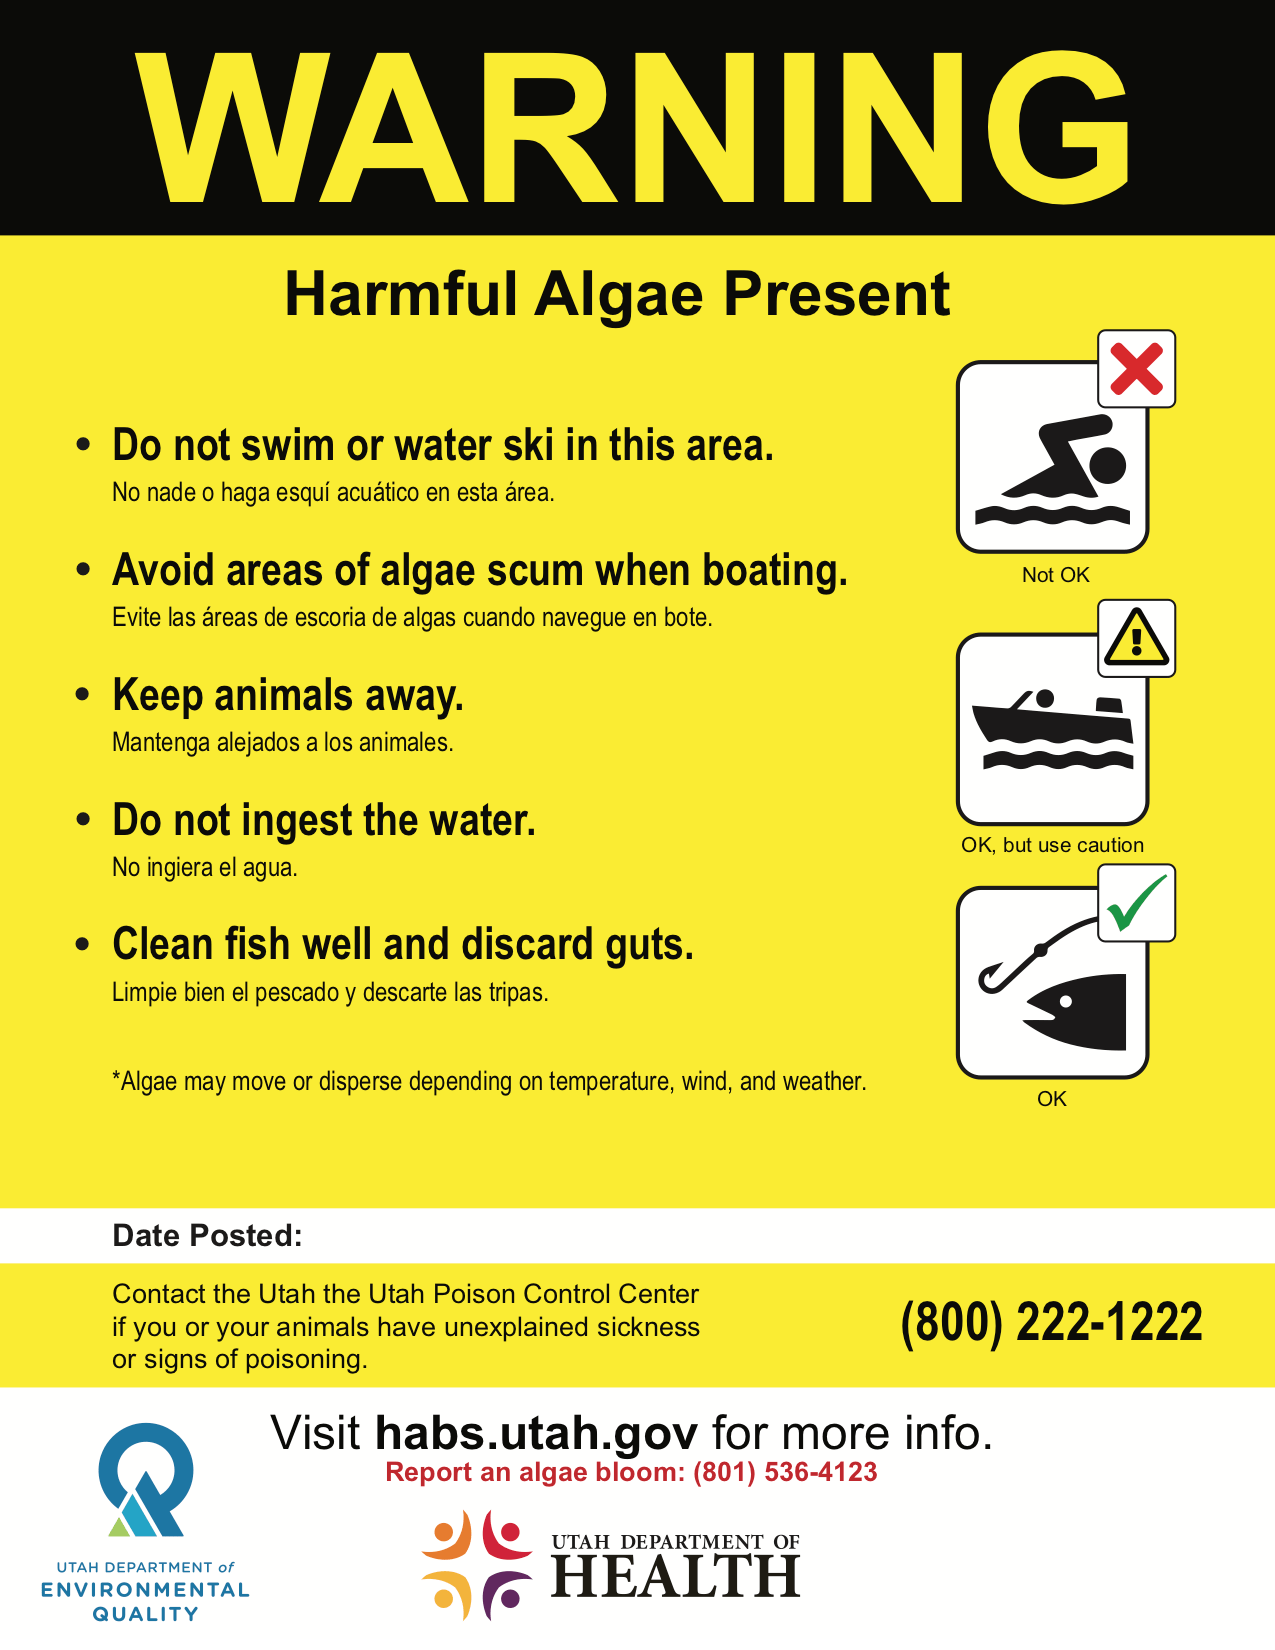 warning sign of harmful algae bloom in Utah Lake, Utah